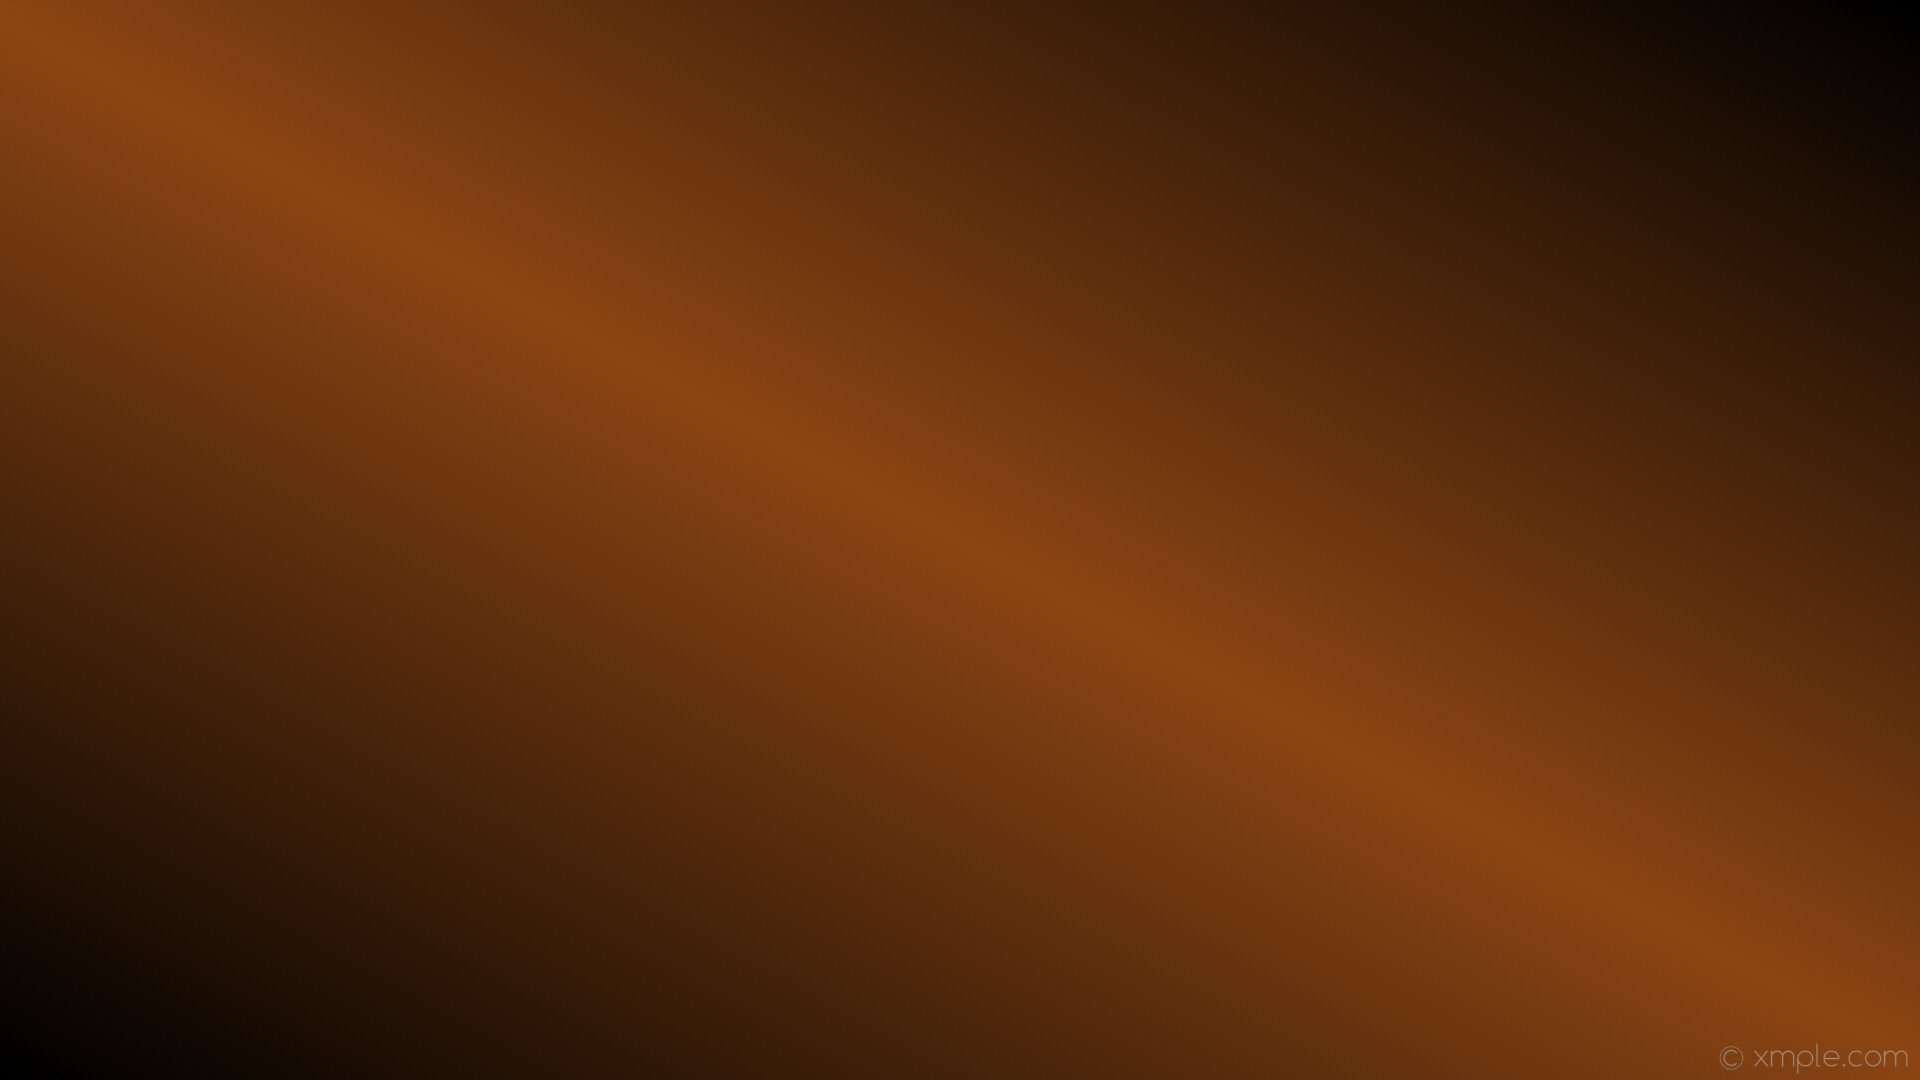 1920x1080 wallpaper brown highlight black gradient linear saddle brown #000000  #8b4513 30Â° 50%